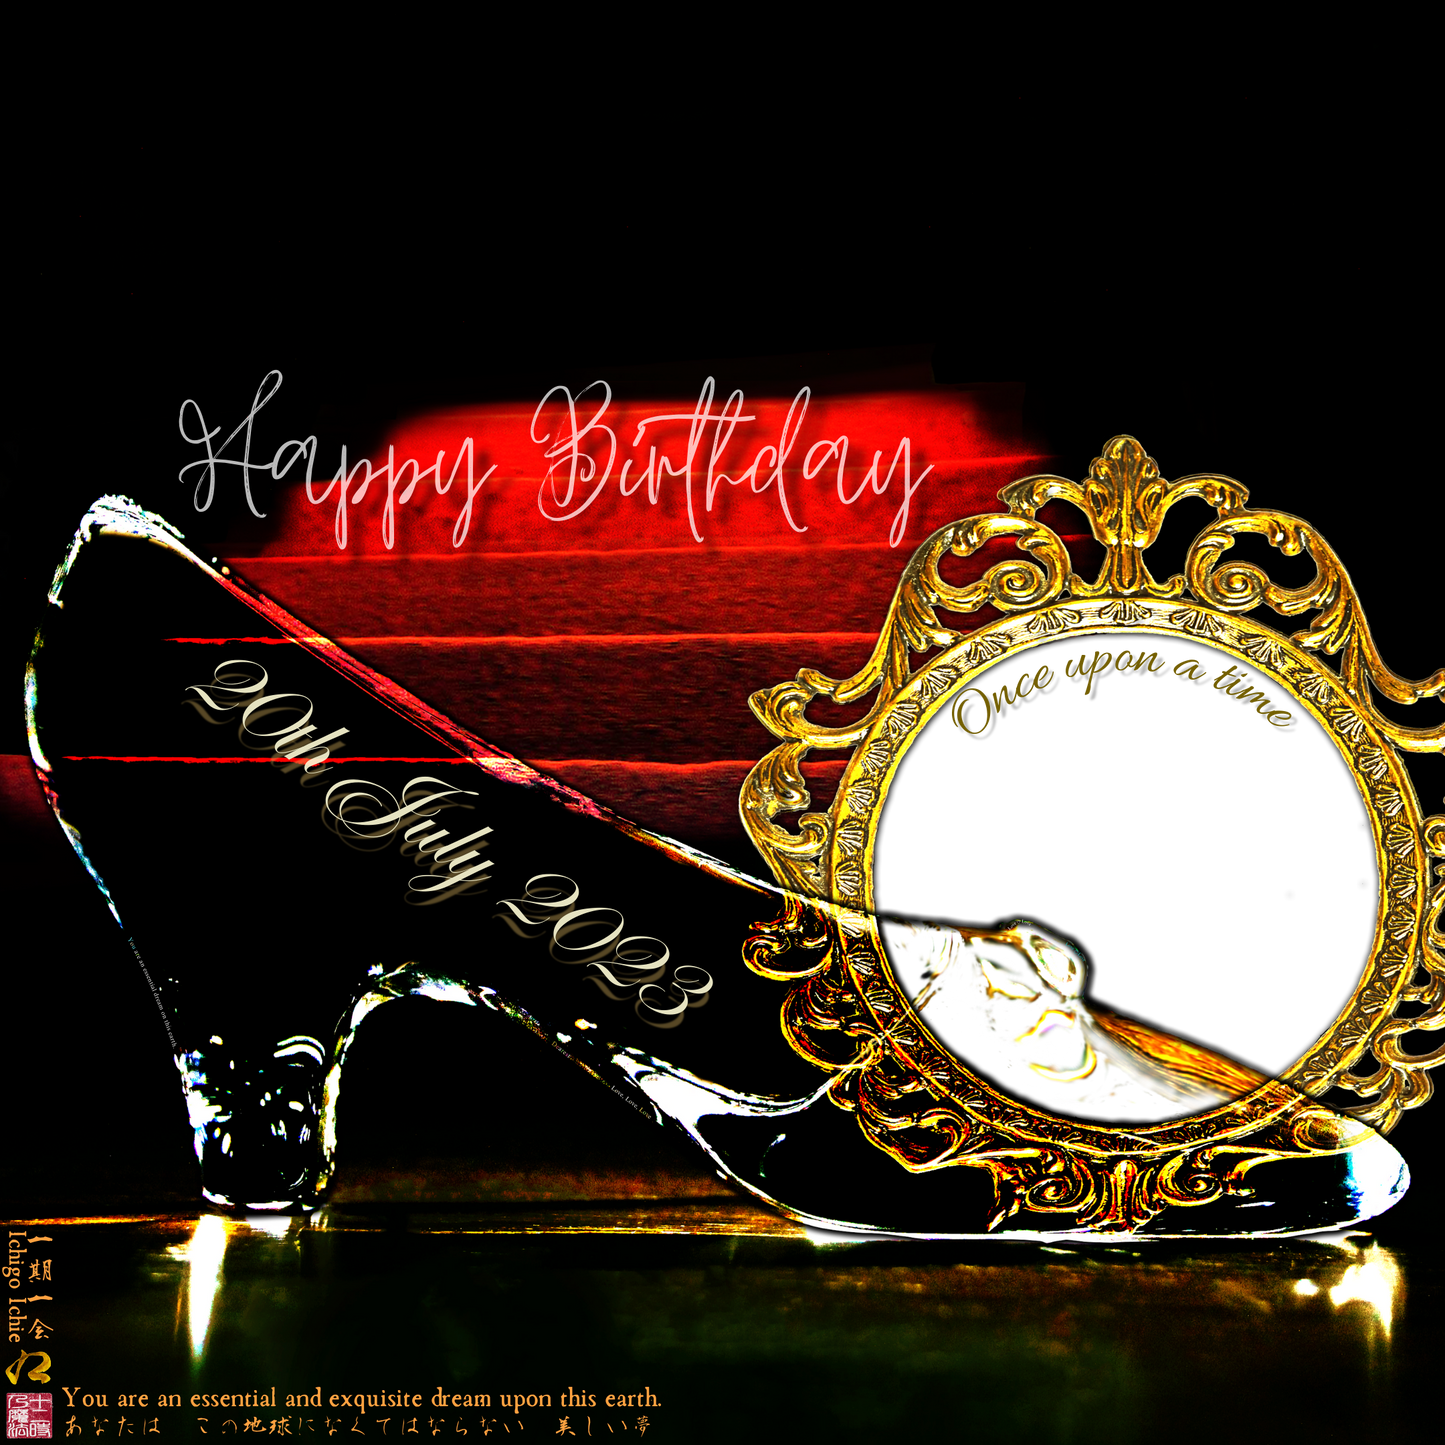 Happy Birthday Glass Slipper "Ichigo Ichie" 20th July 2023 the Right (1-of-1) NFT Art